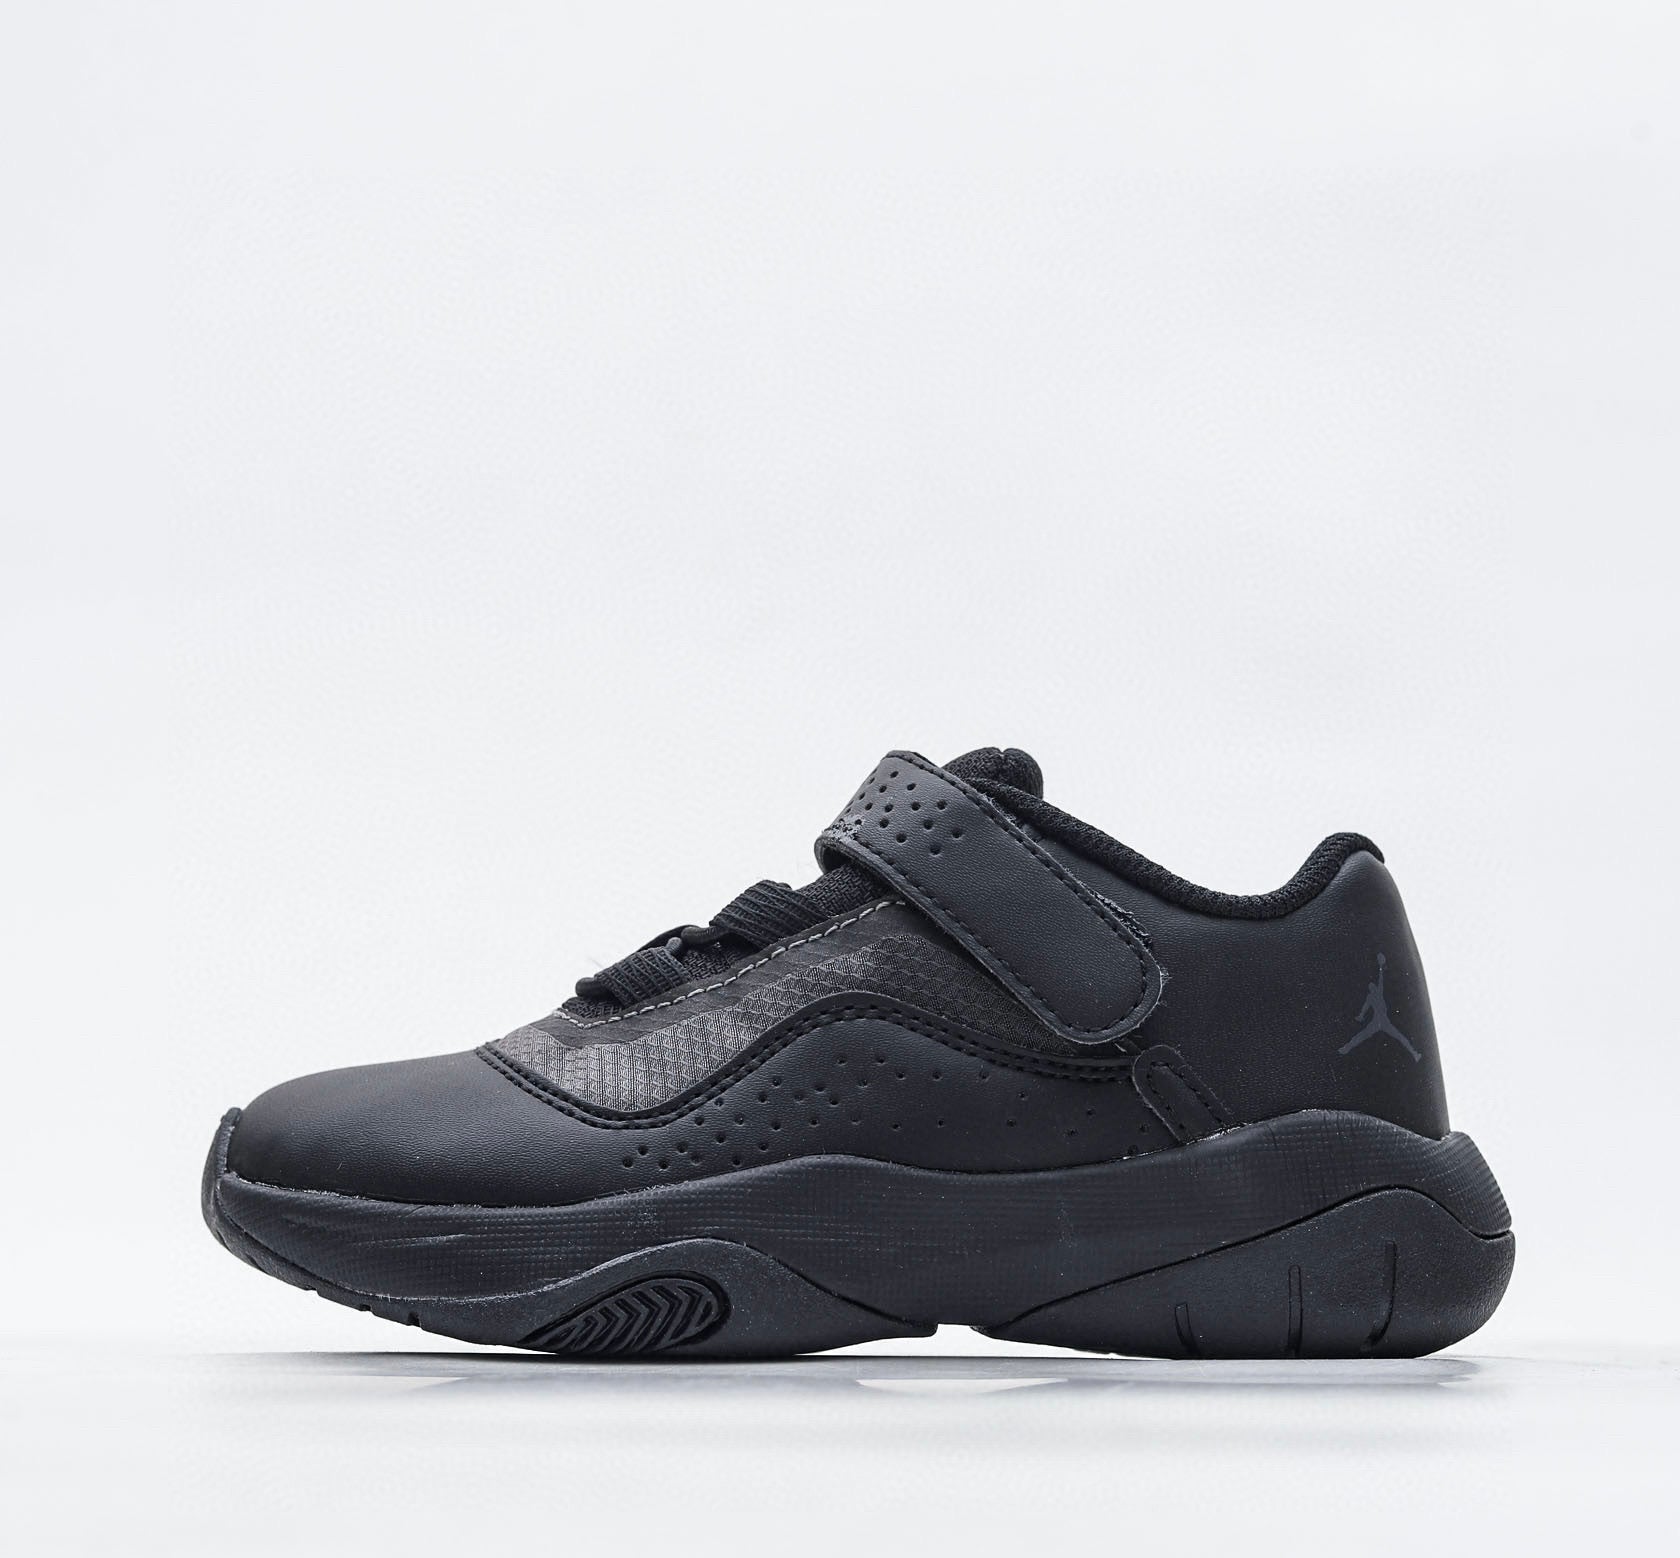 Nike air jordan retro chaussures basses noires